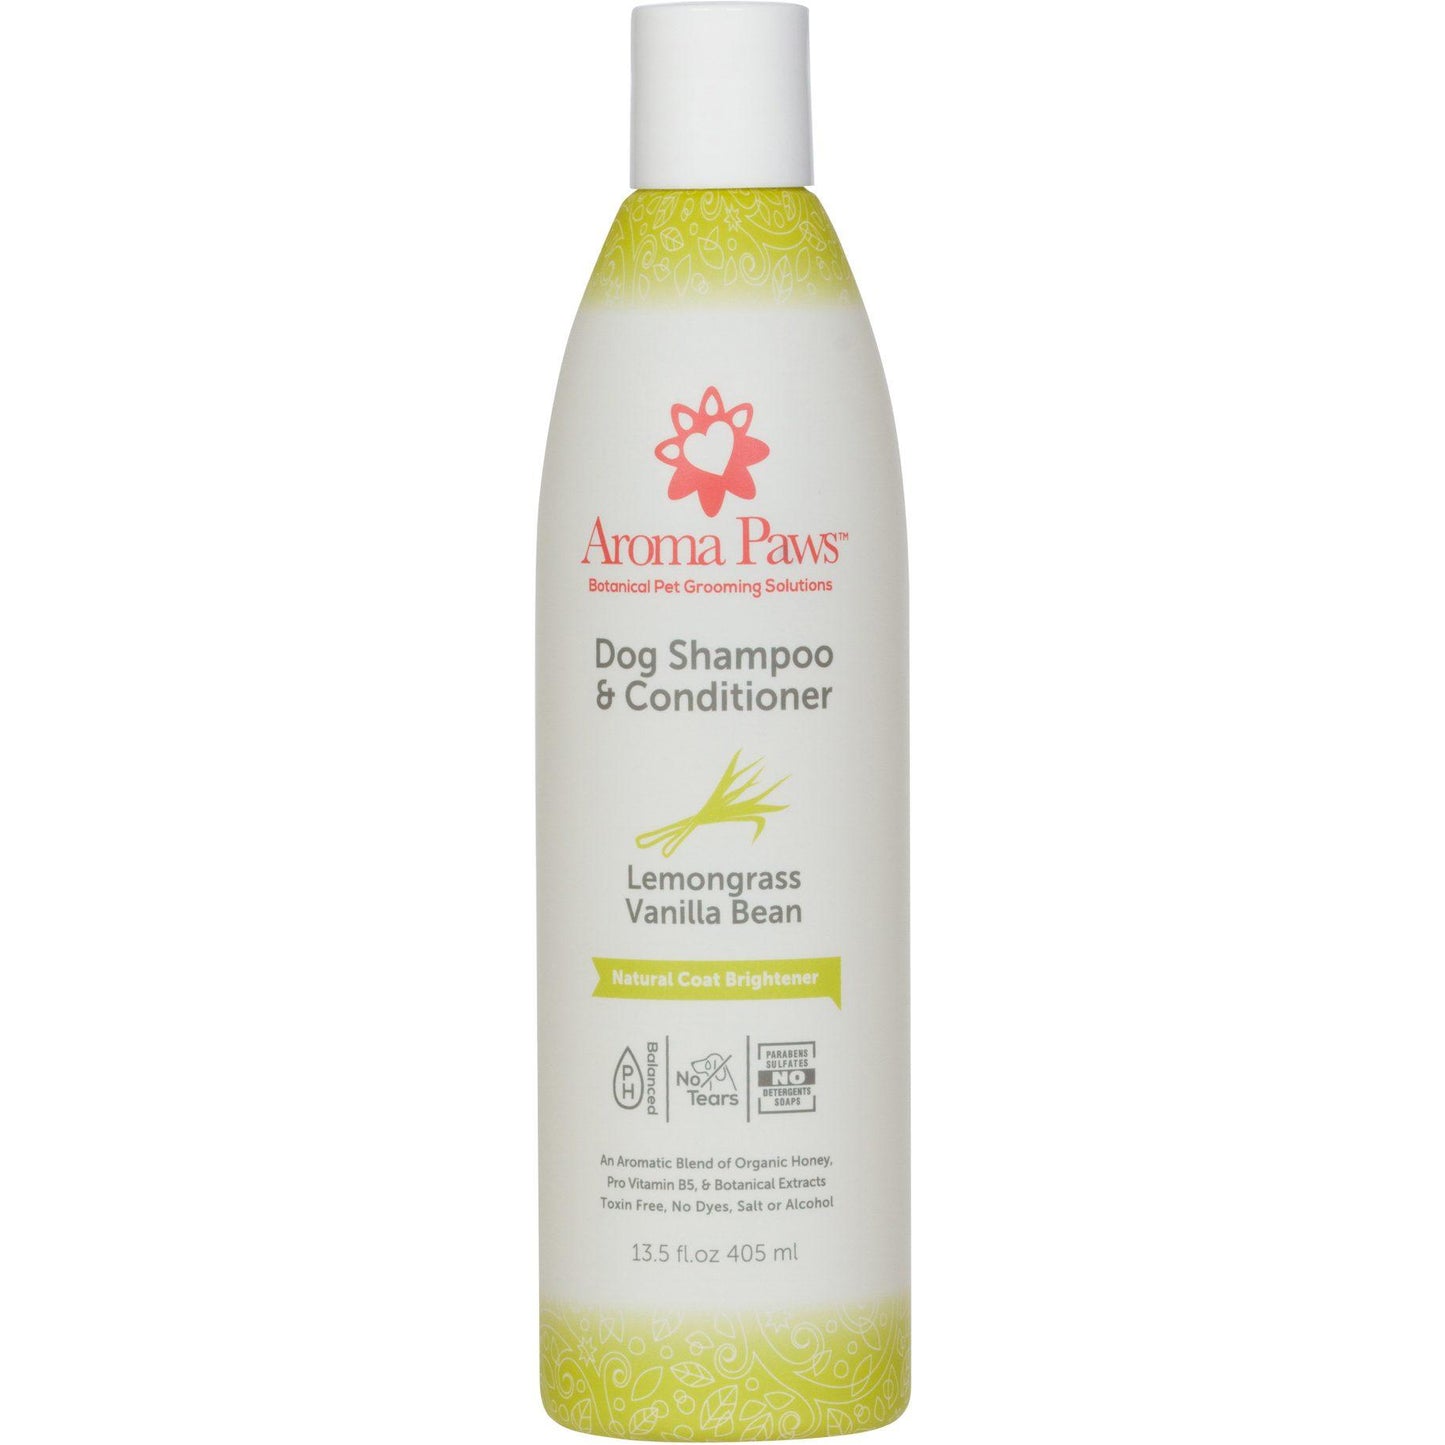 Aroma Paws Natural Coat Brightener Lemongrass Vanilla Bean Dog Shampoo & Conditioner, 13.5-oz